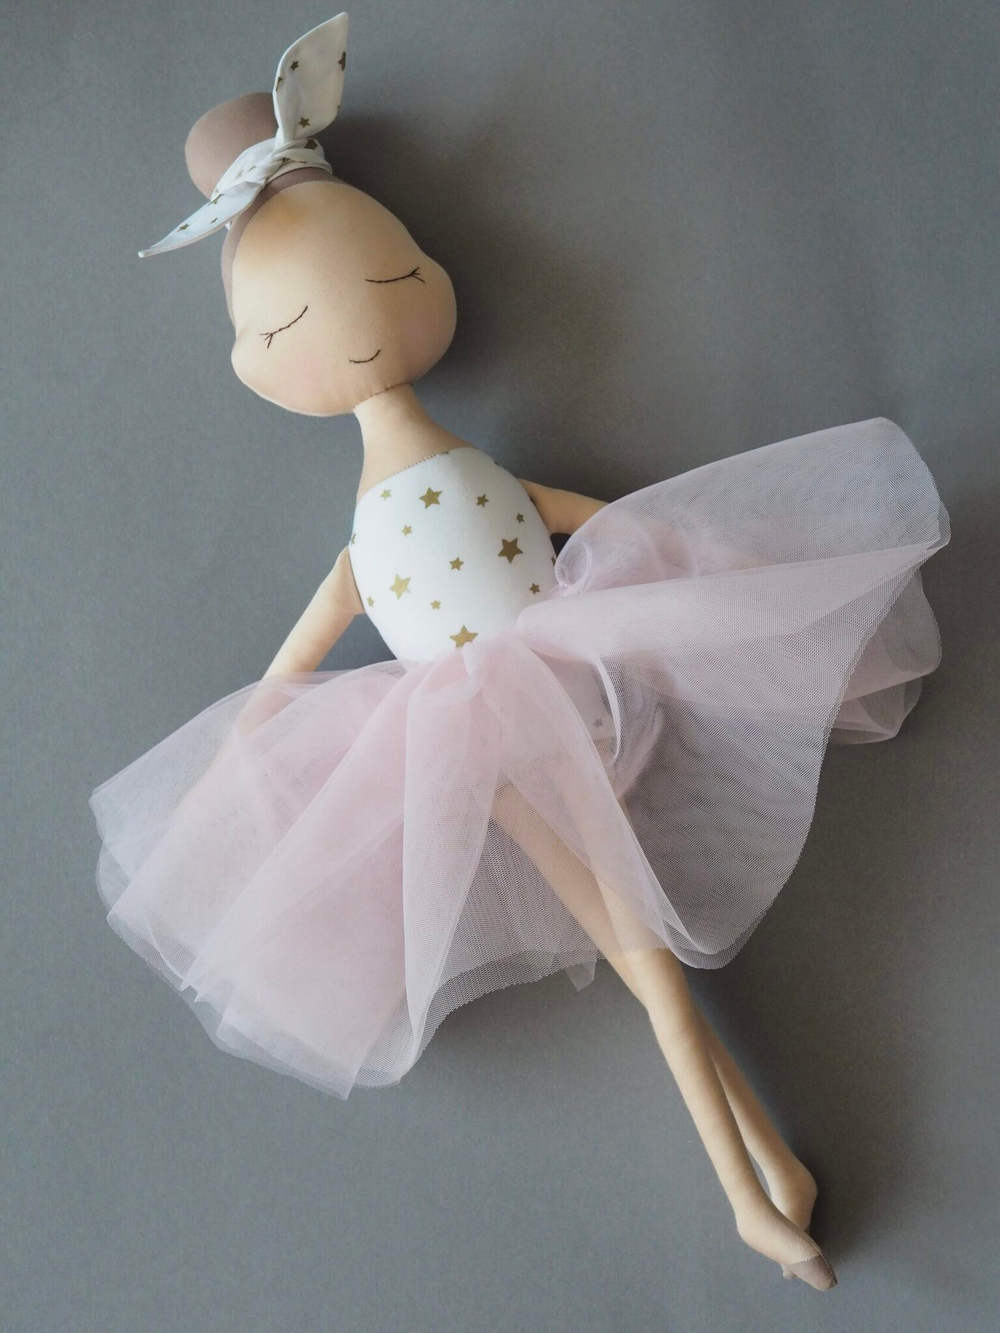 Кукла-балерина с комплектом съемной одежды (юбочка, кардиган и 2 повязки)